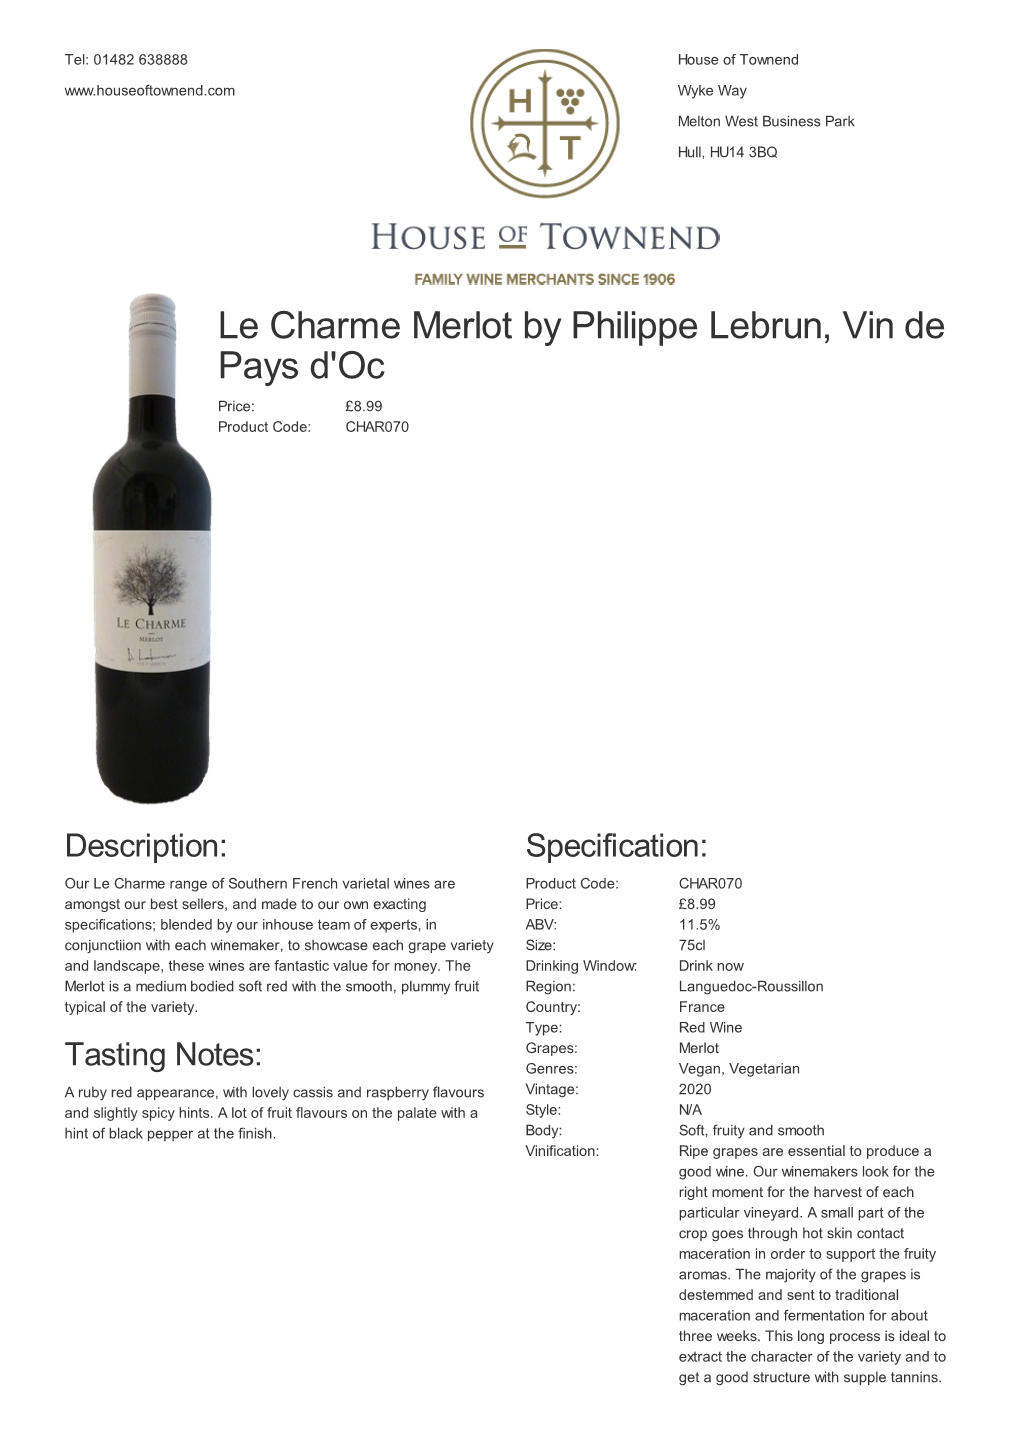 Le Charme Merlot by Philippe Lebrun, Vin De Pays D'oc Price: £8.99 Product Code: CHAR070